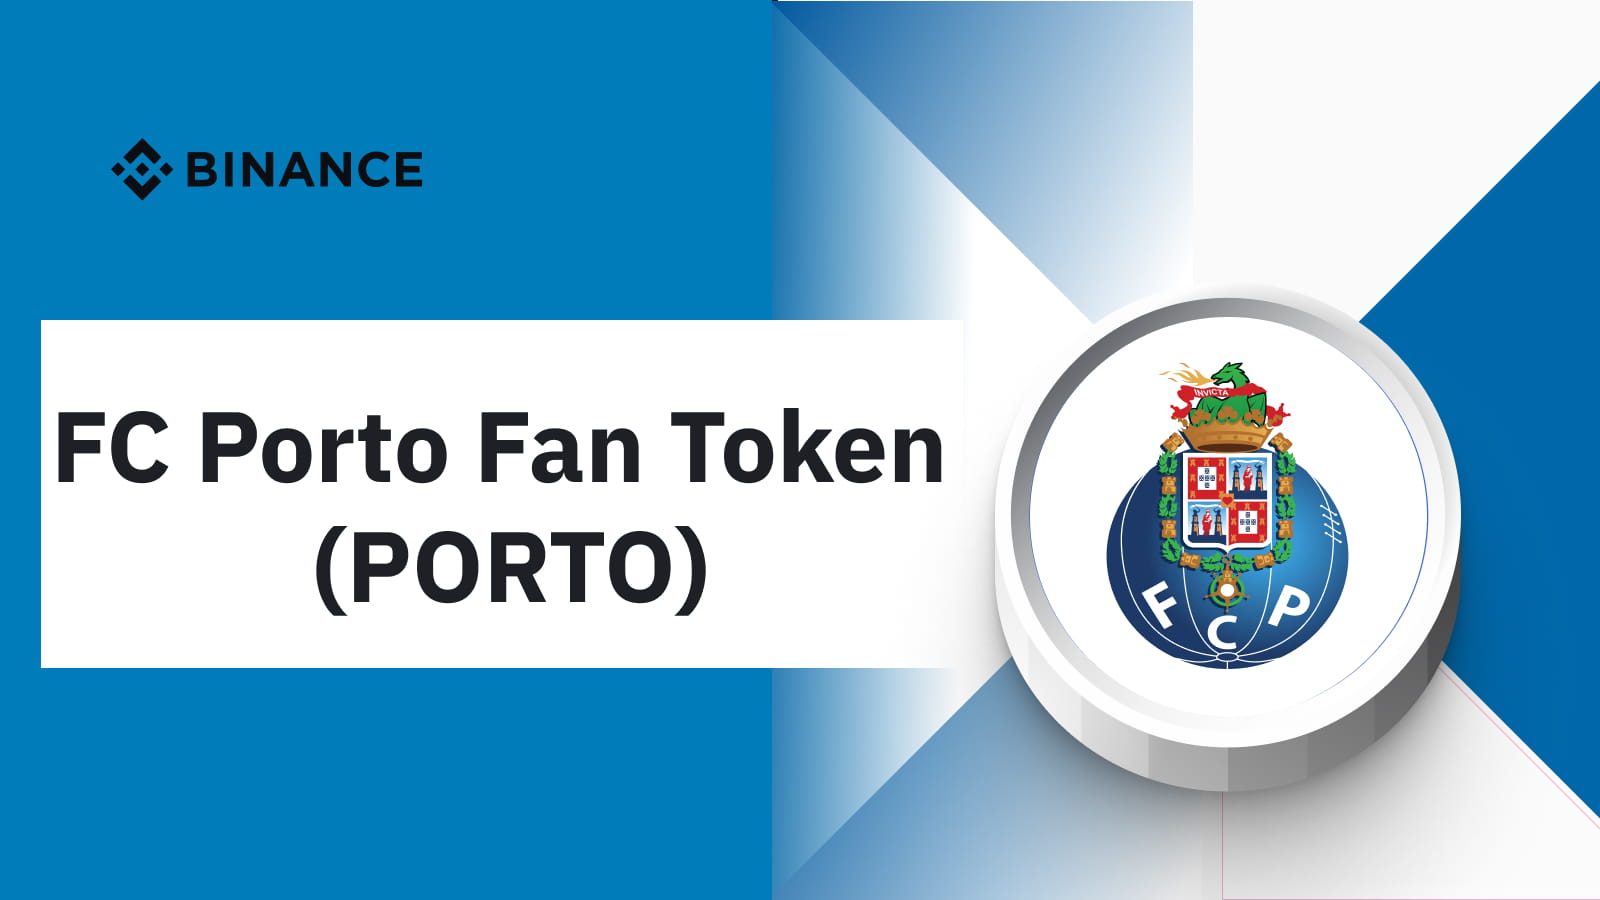 Báo cáo dự án - FC Porto Fan Token (PORTO)